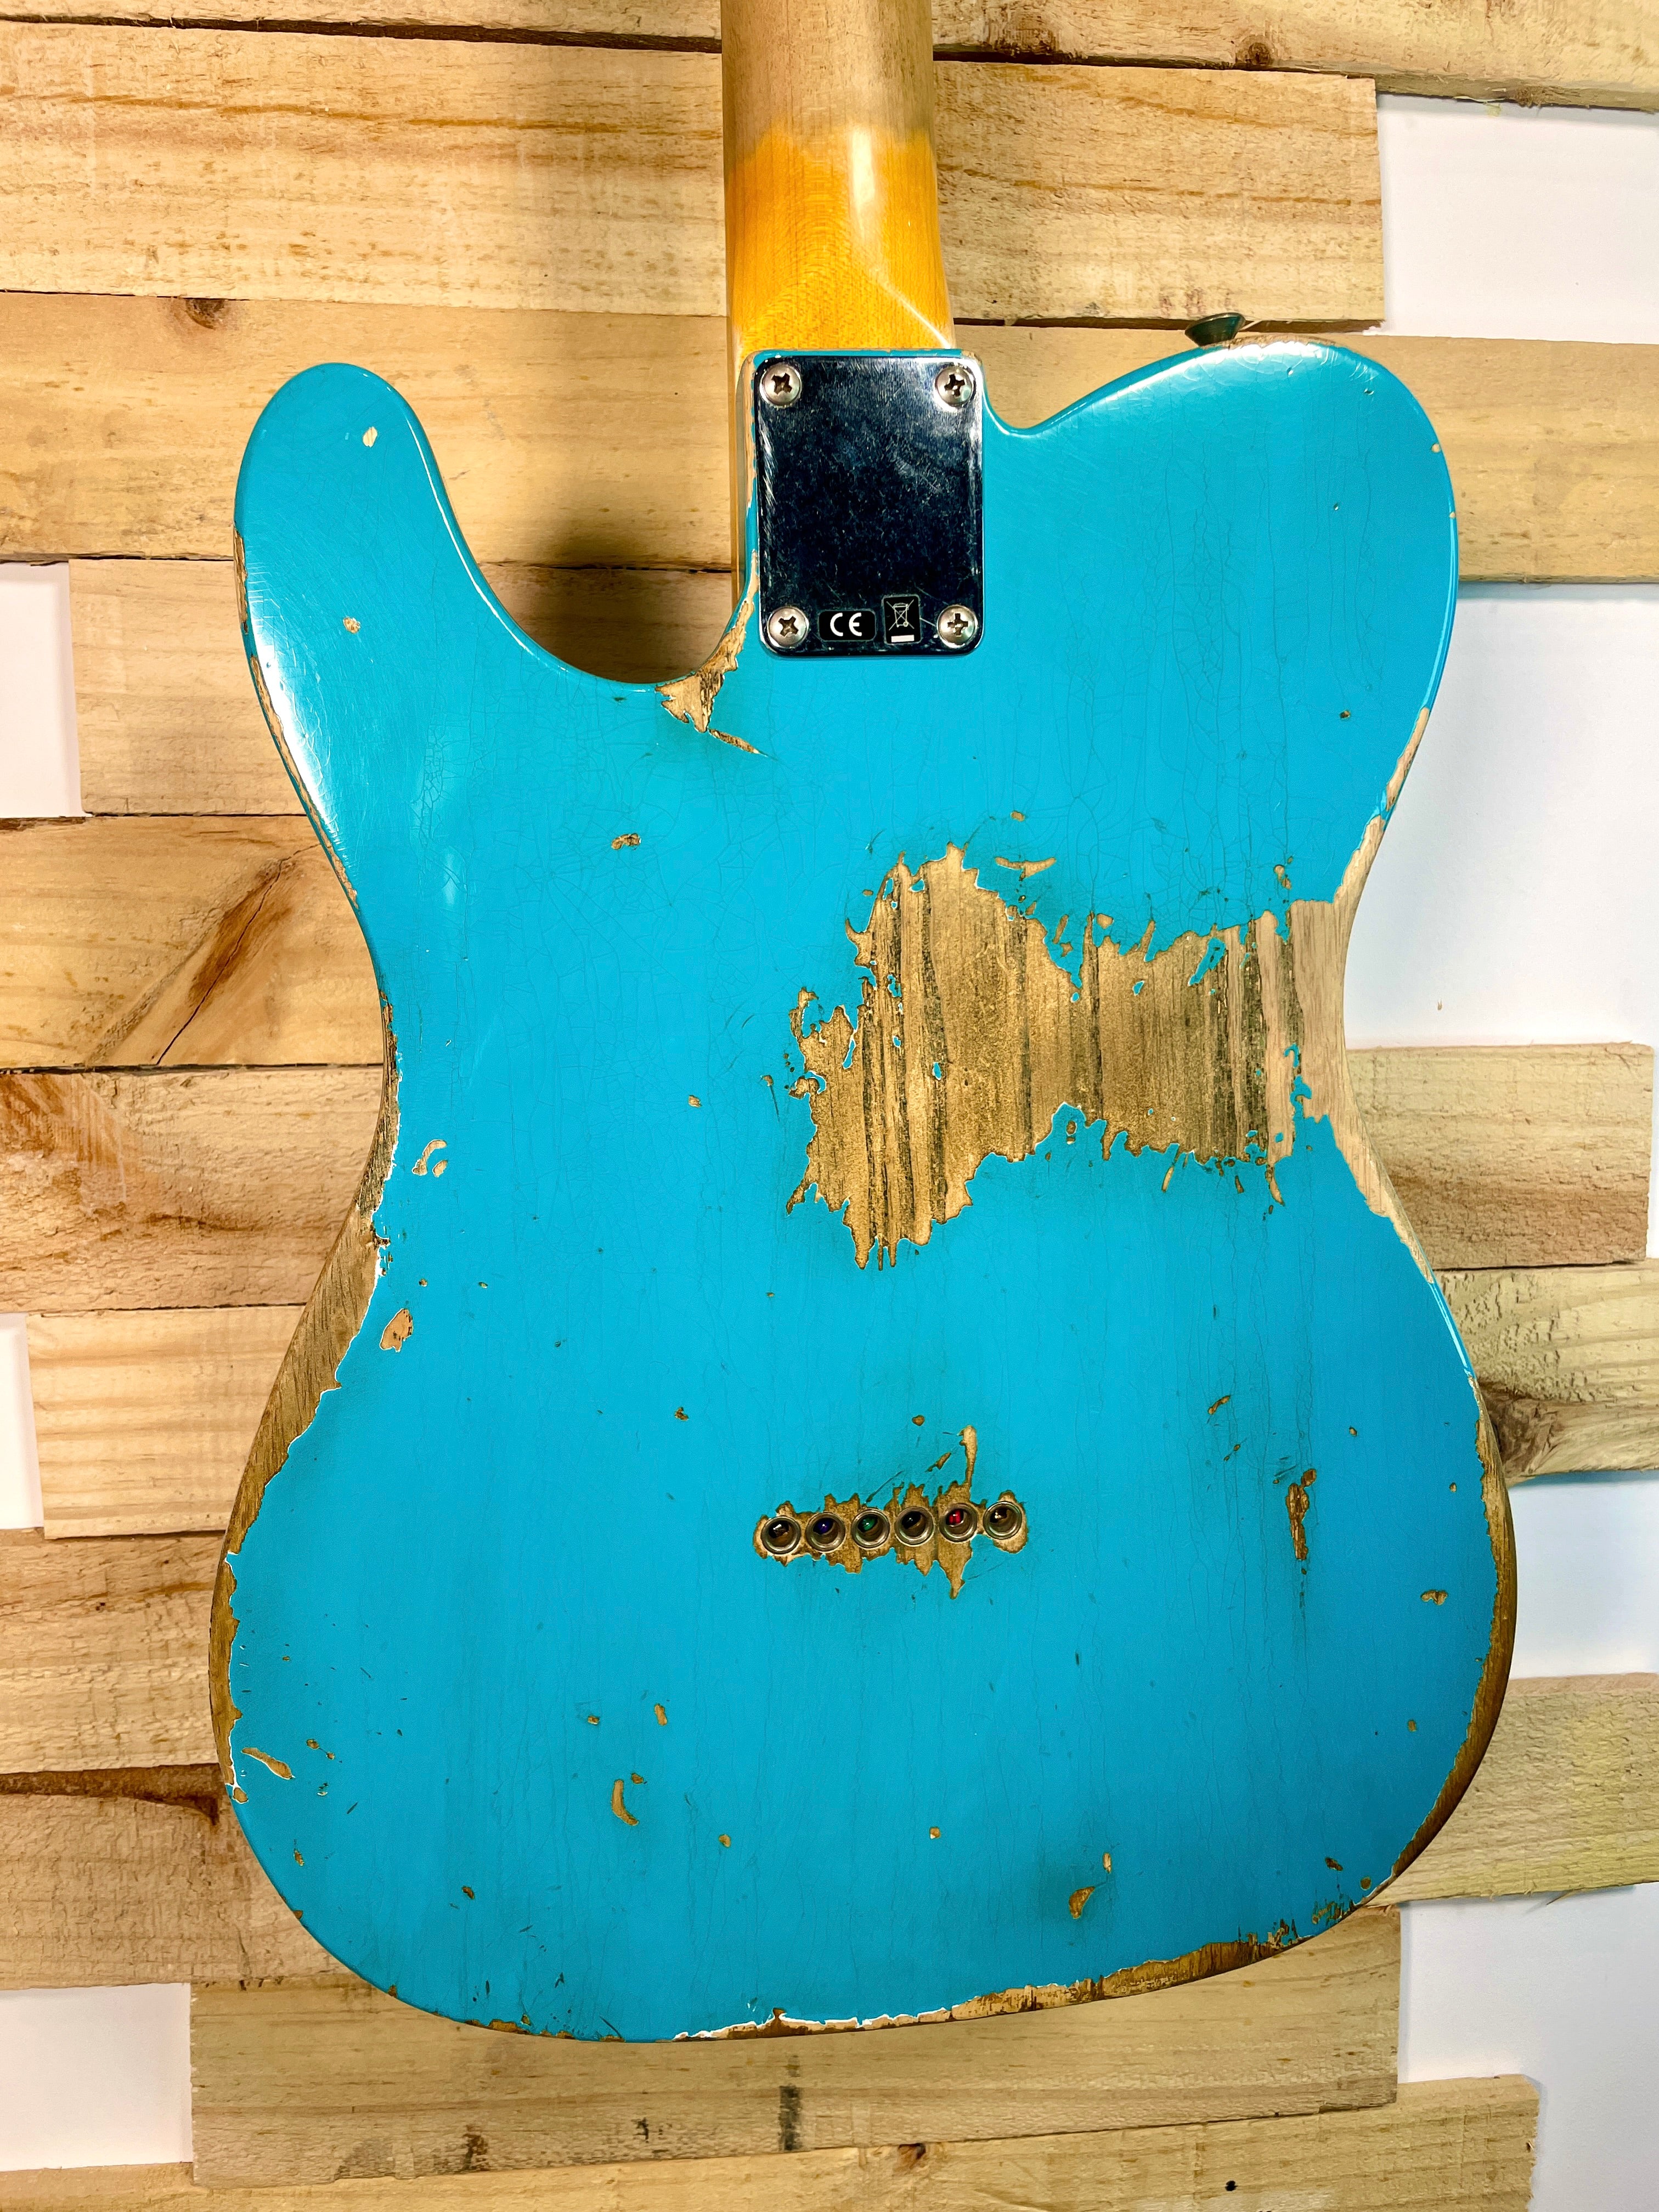 Fender Custom Shop 52 Telecaster Heavy Relic Taos Turquoise